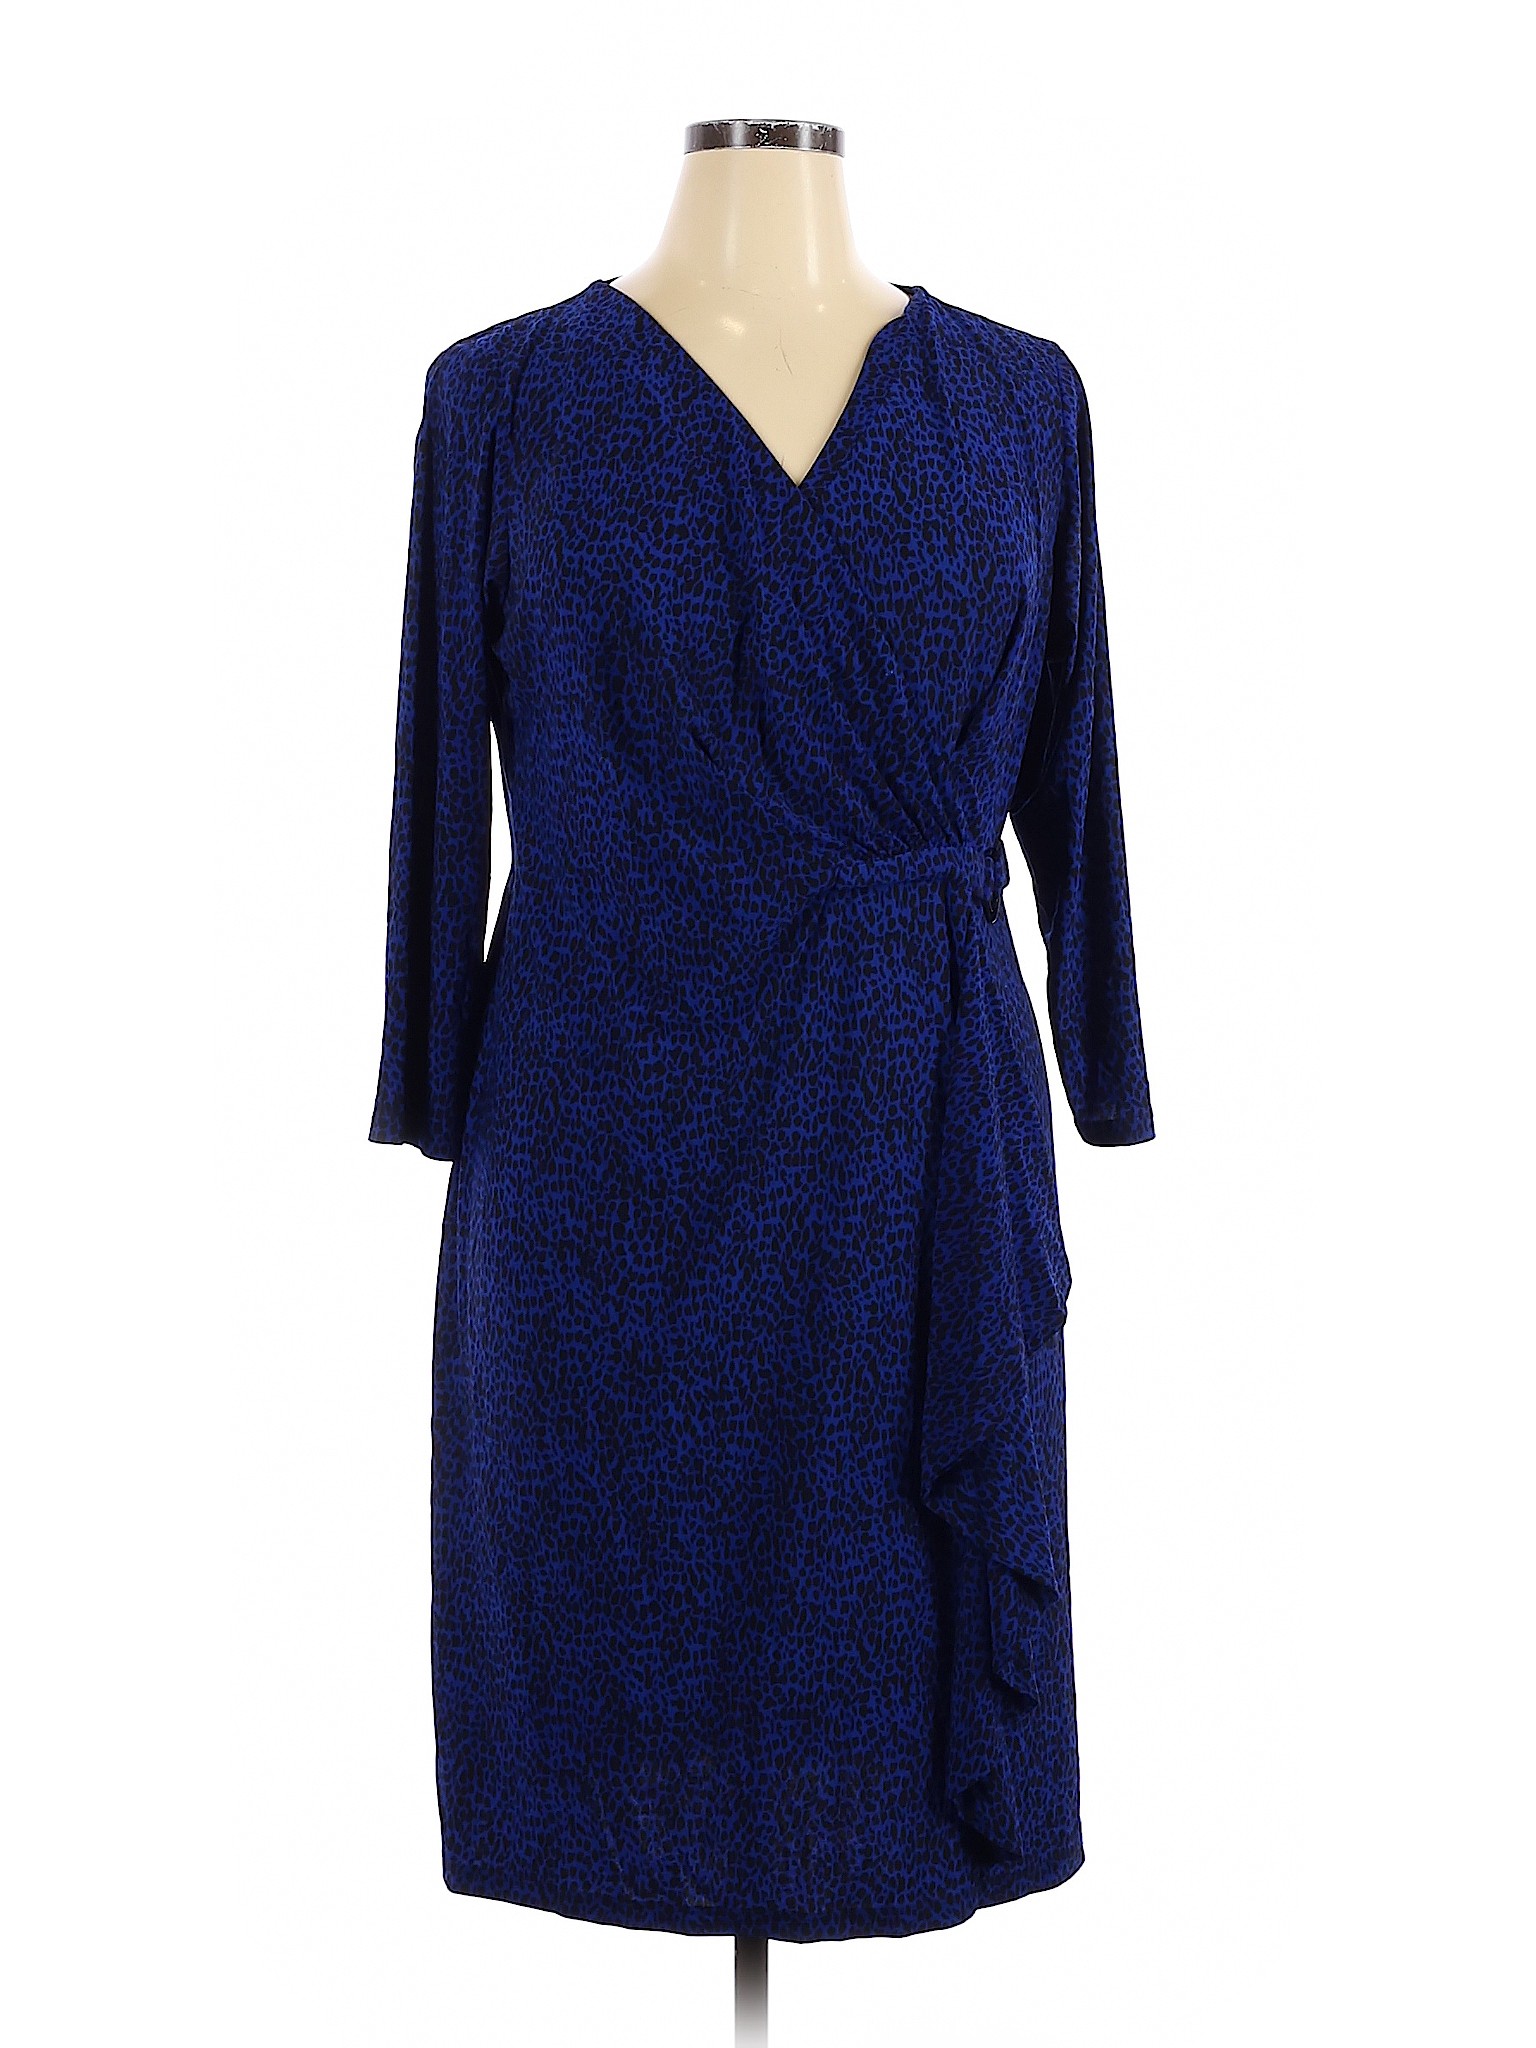 Jones New York Women Blue Cocktail Dress 14 | eBay